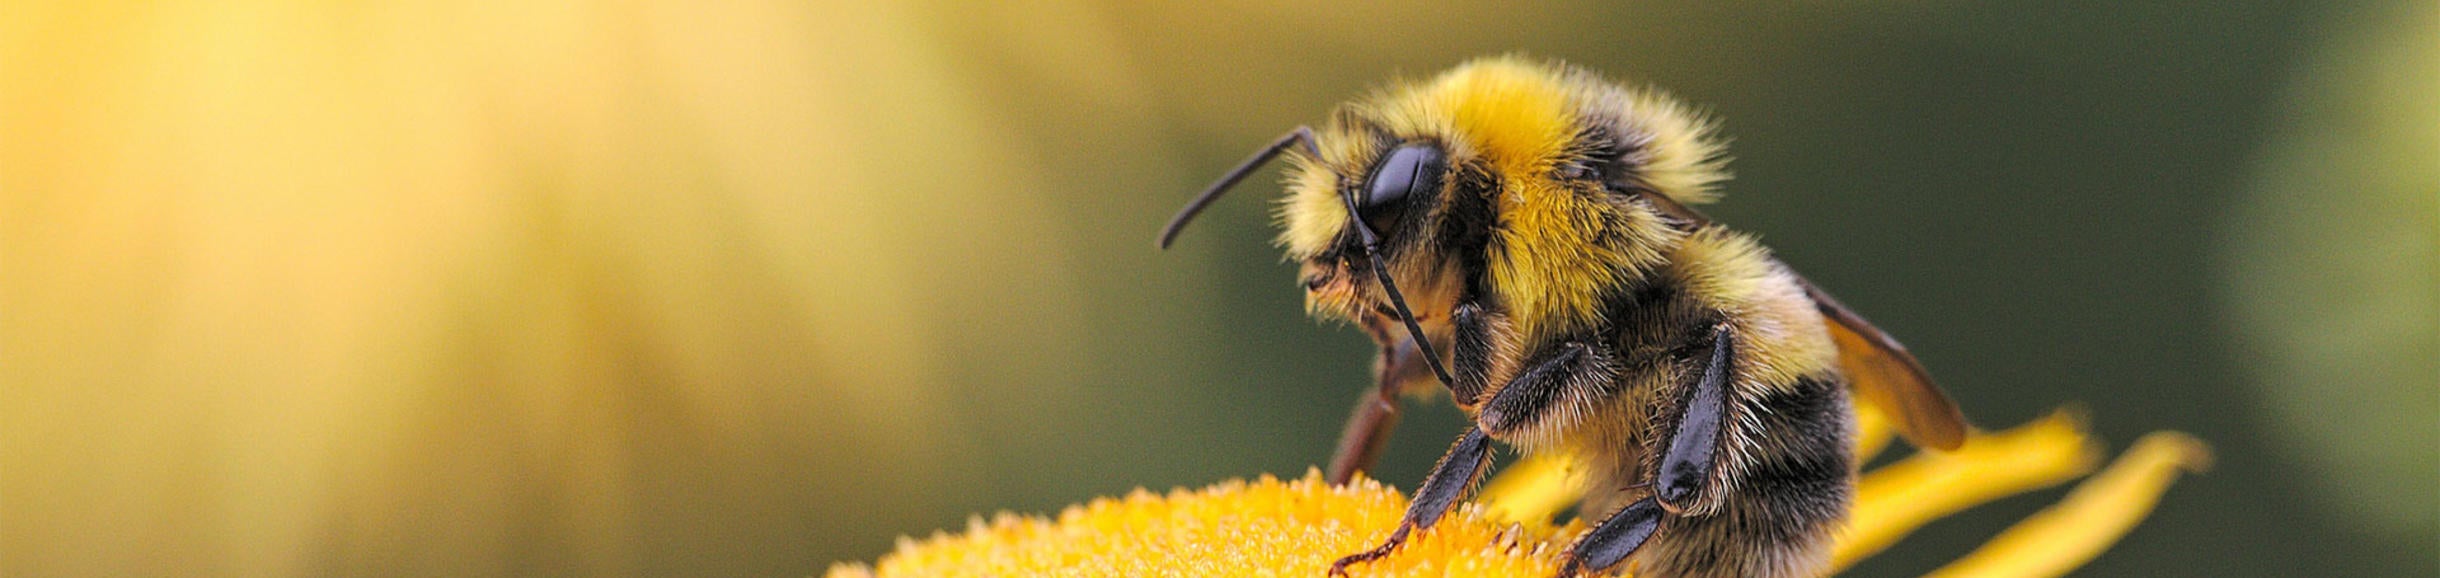 Bee on yellow flower (c) Dmitry Grigoriev